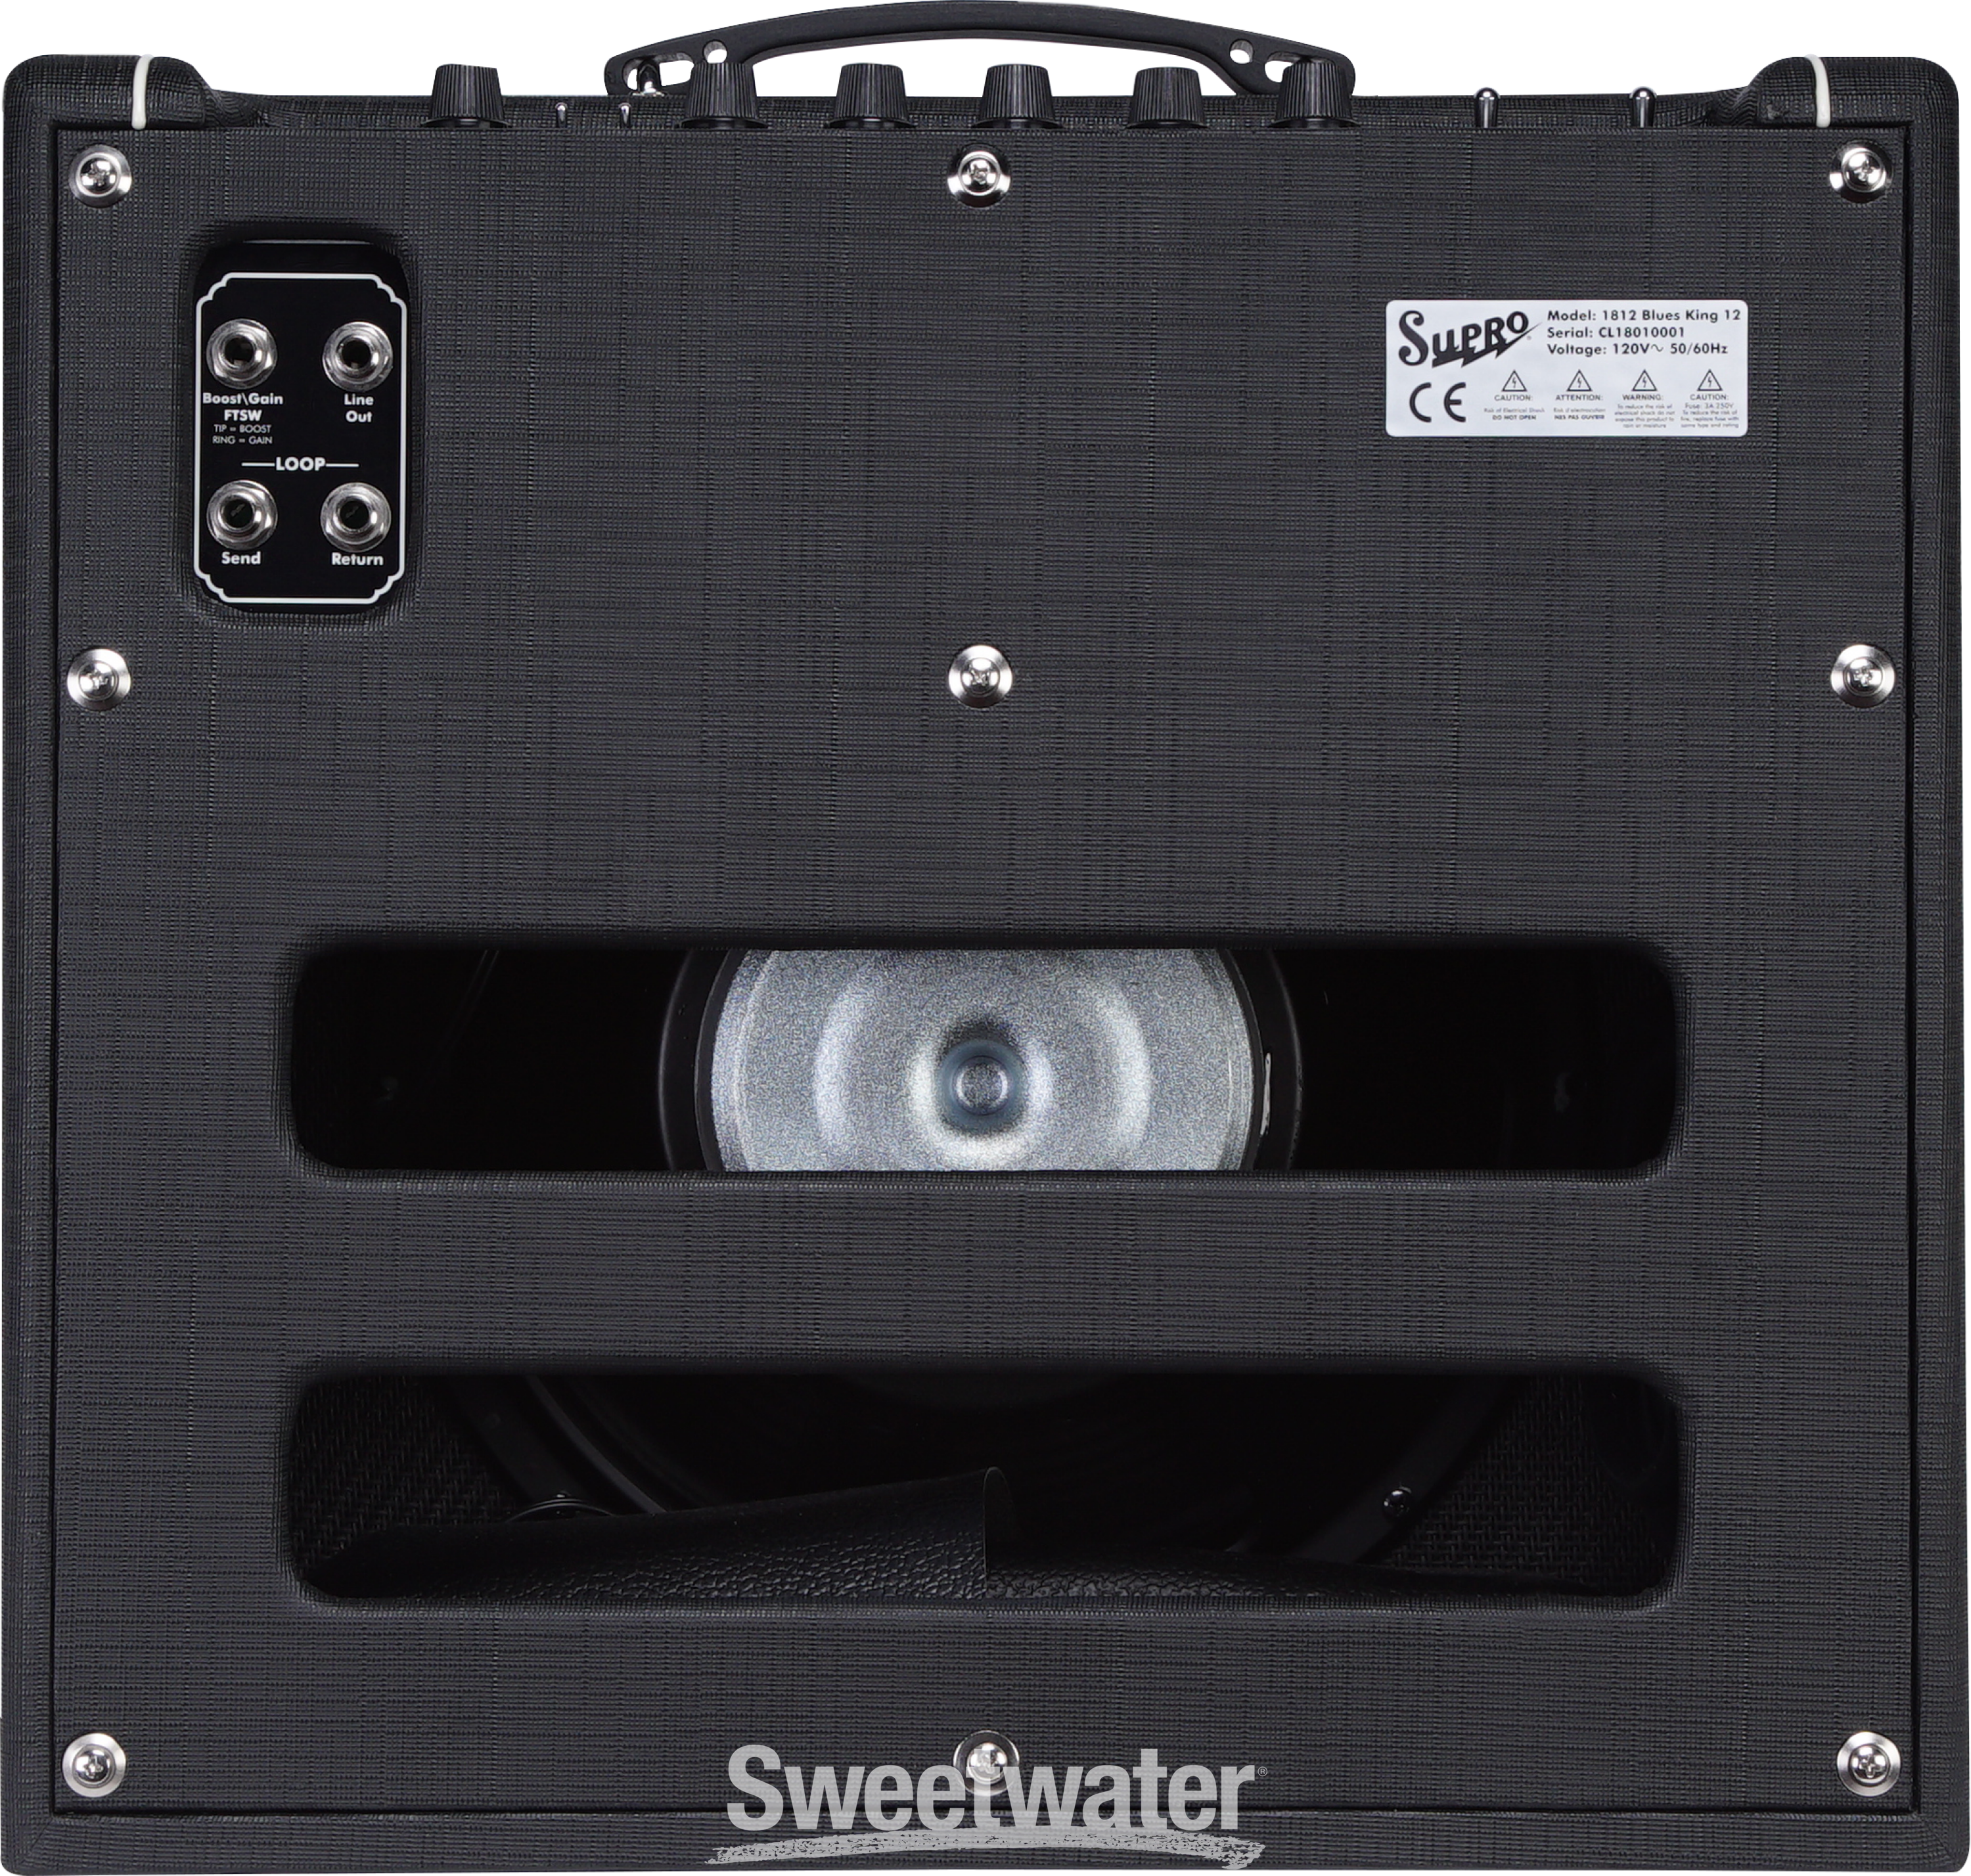 Supro Blues King  1x"  watt Tube Combo Amp   Sweetwater